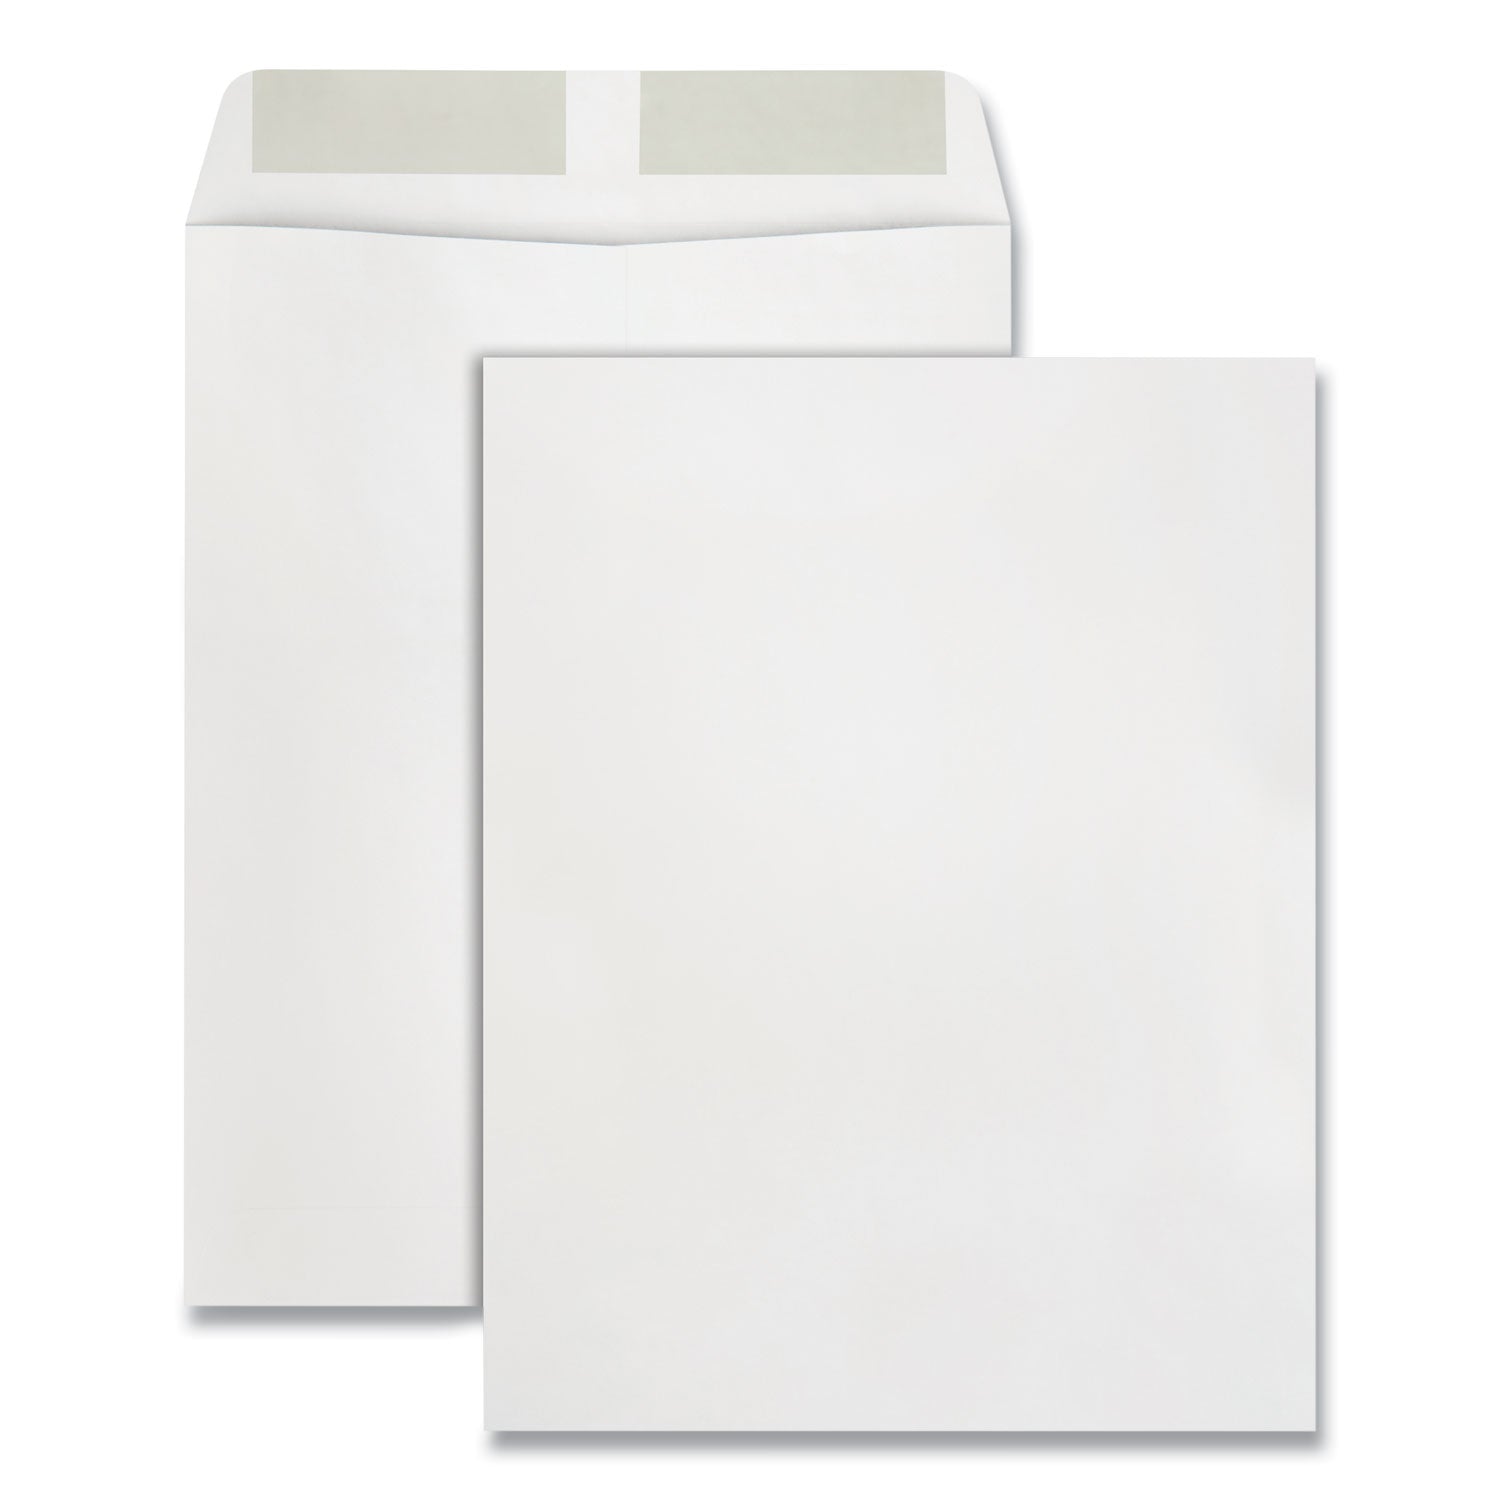 Catalog Envelope, 28 lb Bond Weight Paper, #13 1/2, Square Flap, Gummed Closure, 10 x 13, White, 250/Box - 